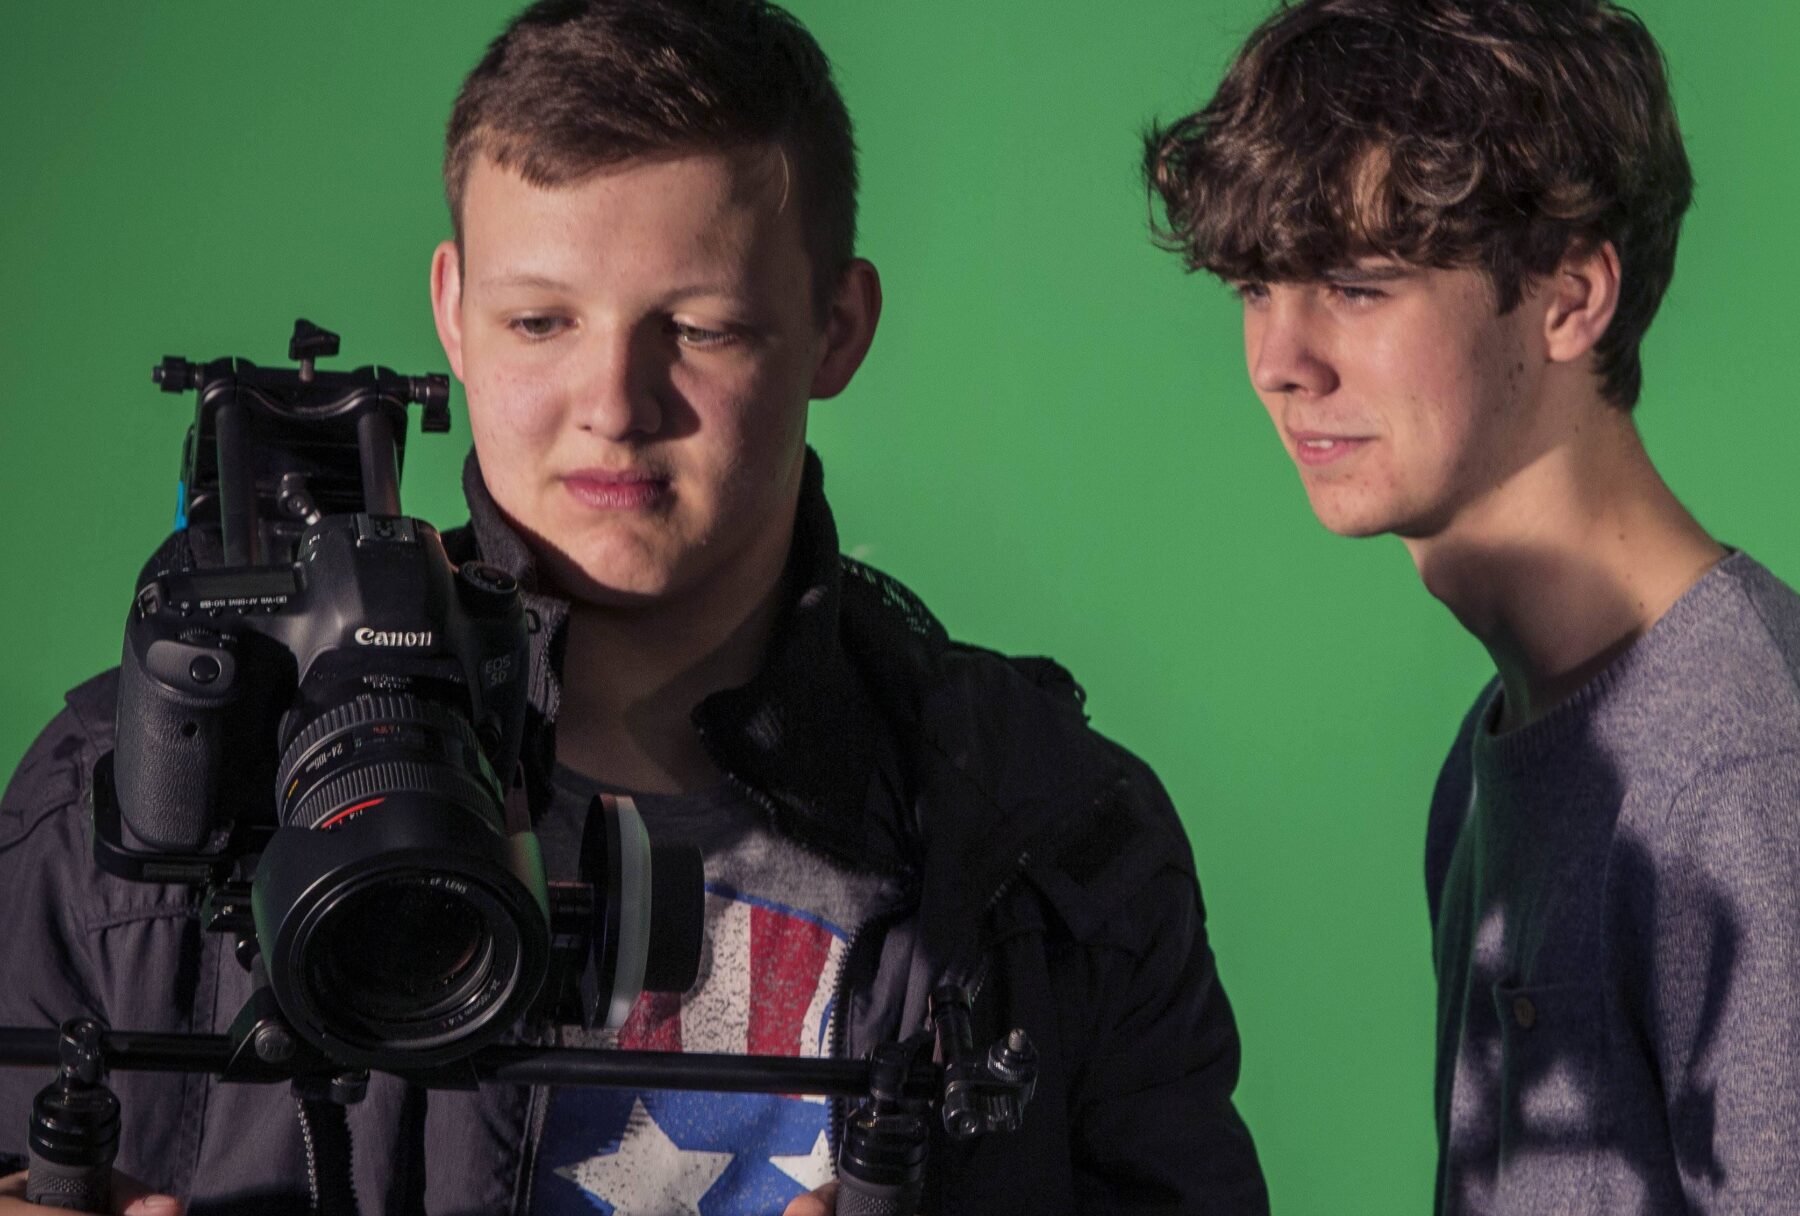 filmmaking degree - students' project